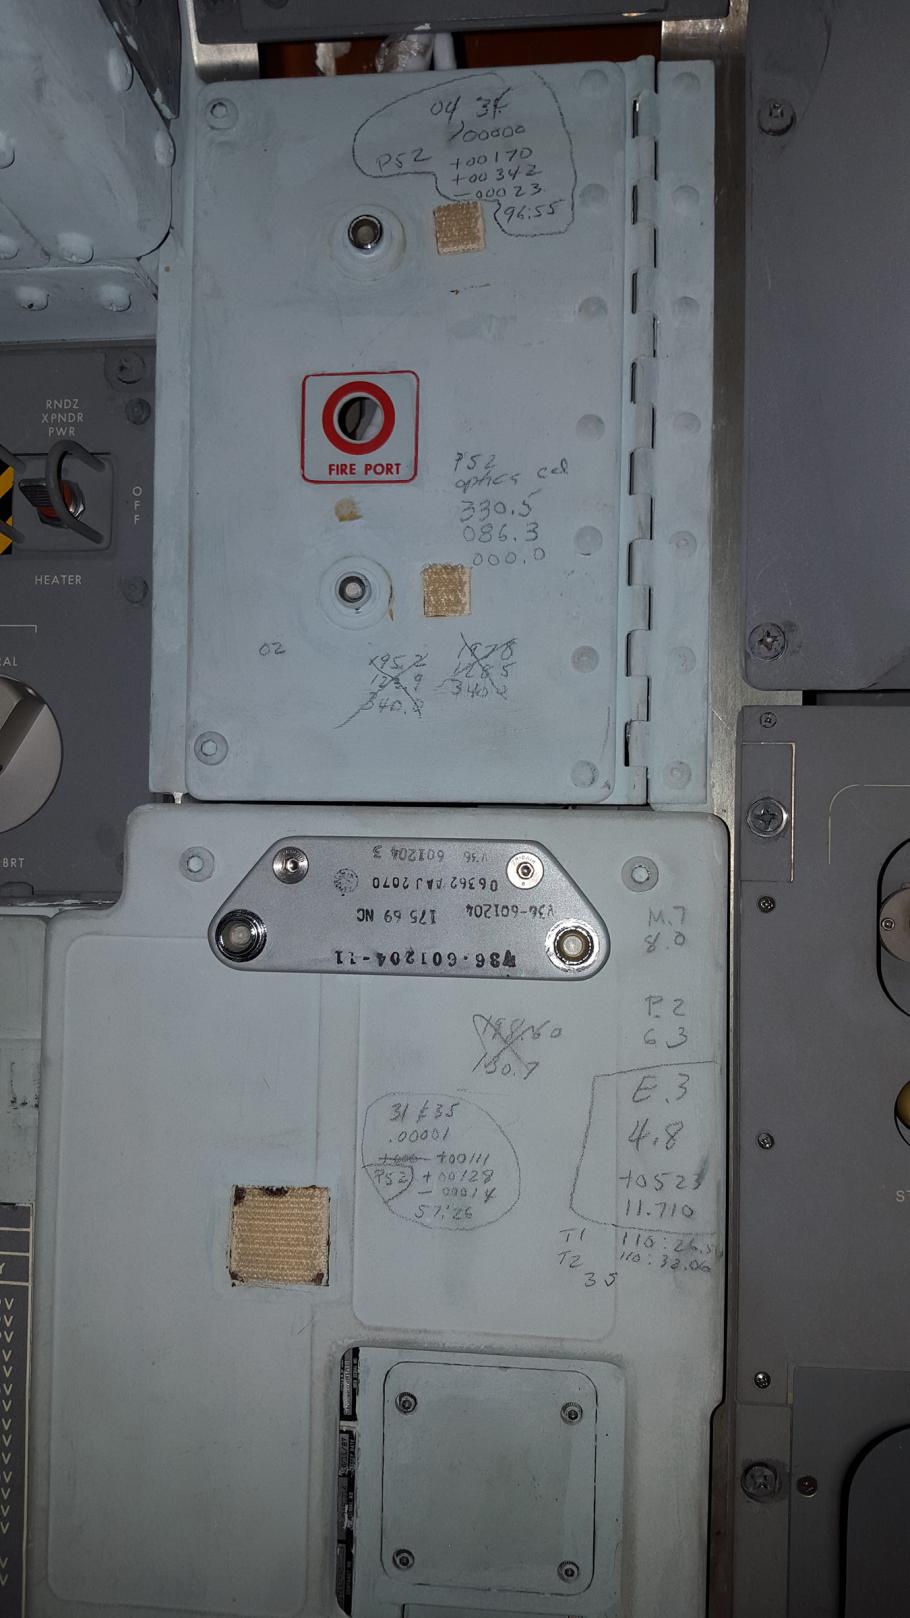 Markings inside the Apollo 11 Command Module